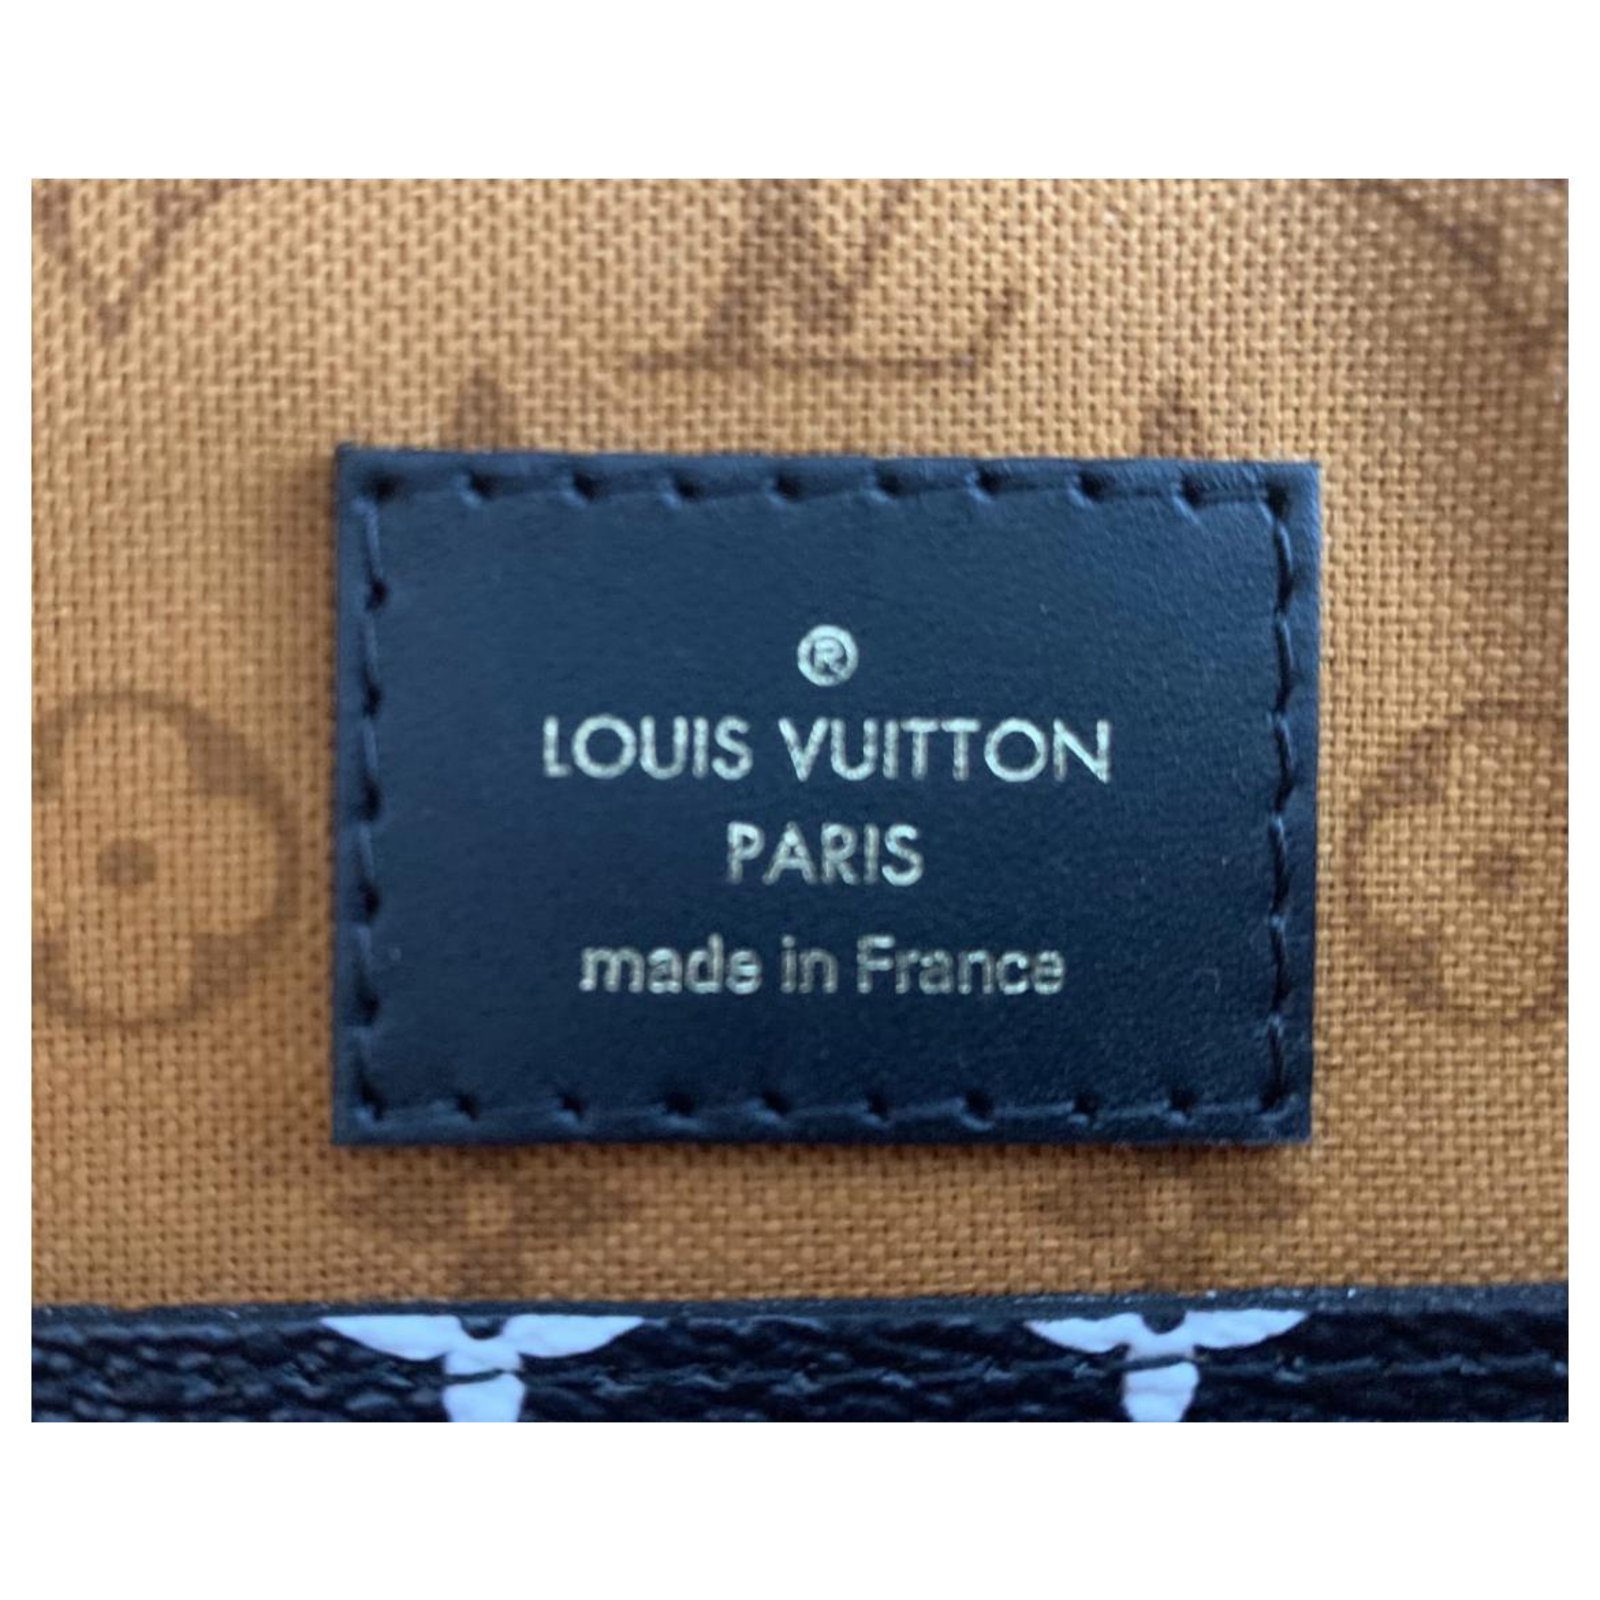 Louis Vuitton Limited Edition Cream/Caramel Monogram Canvas Crafty